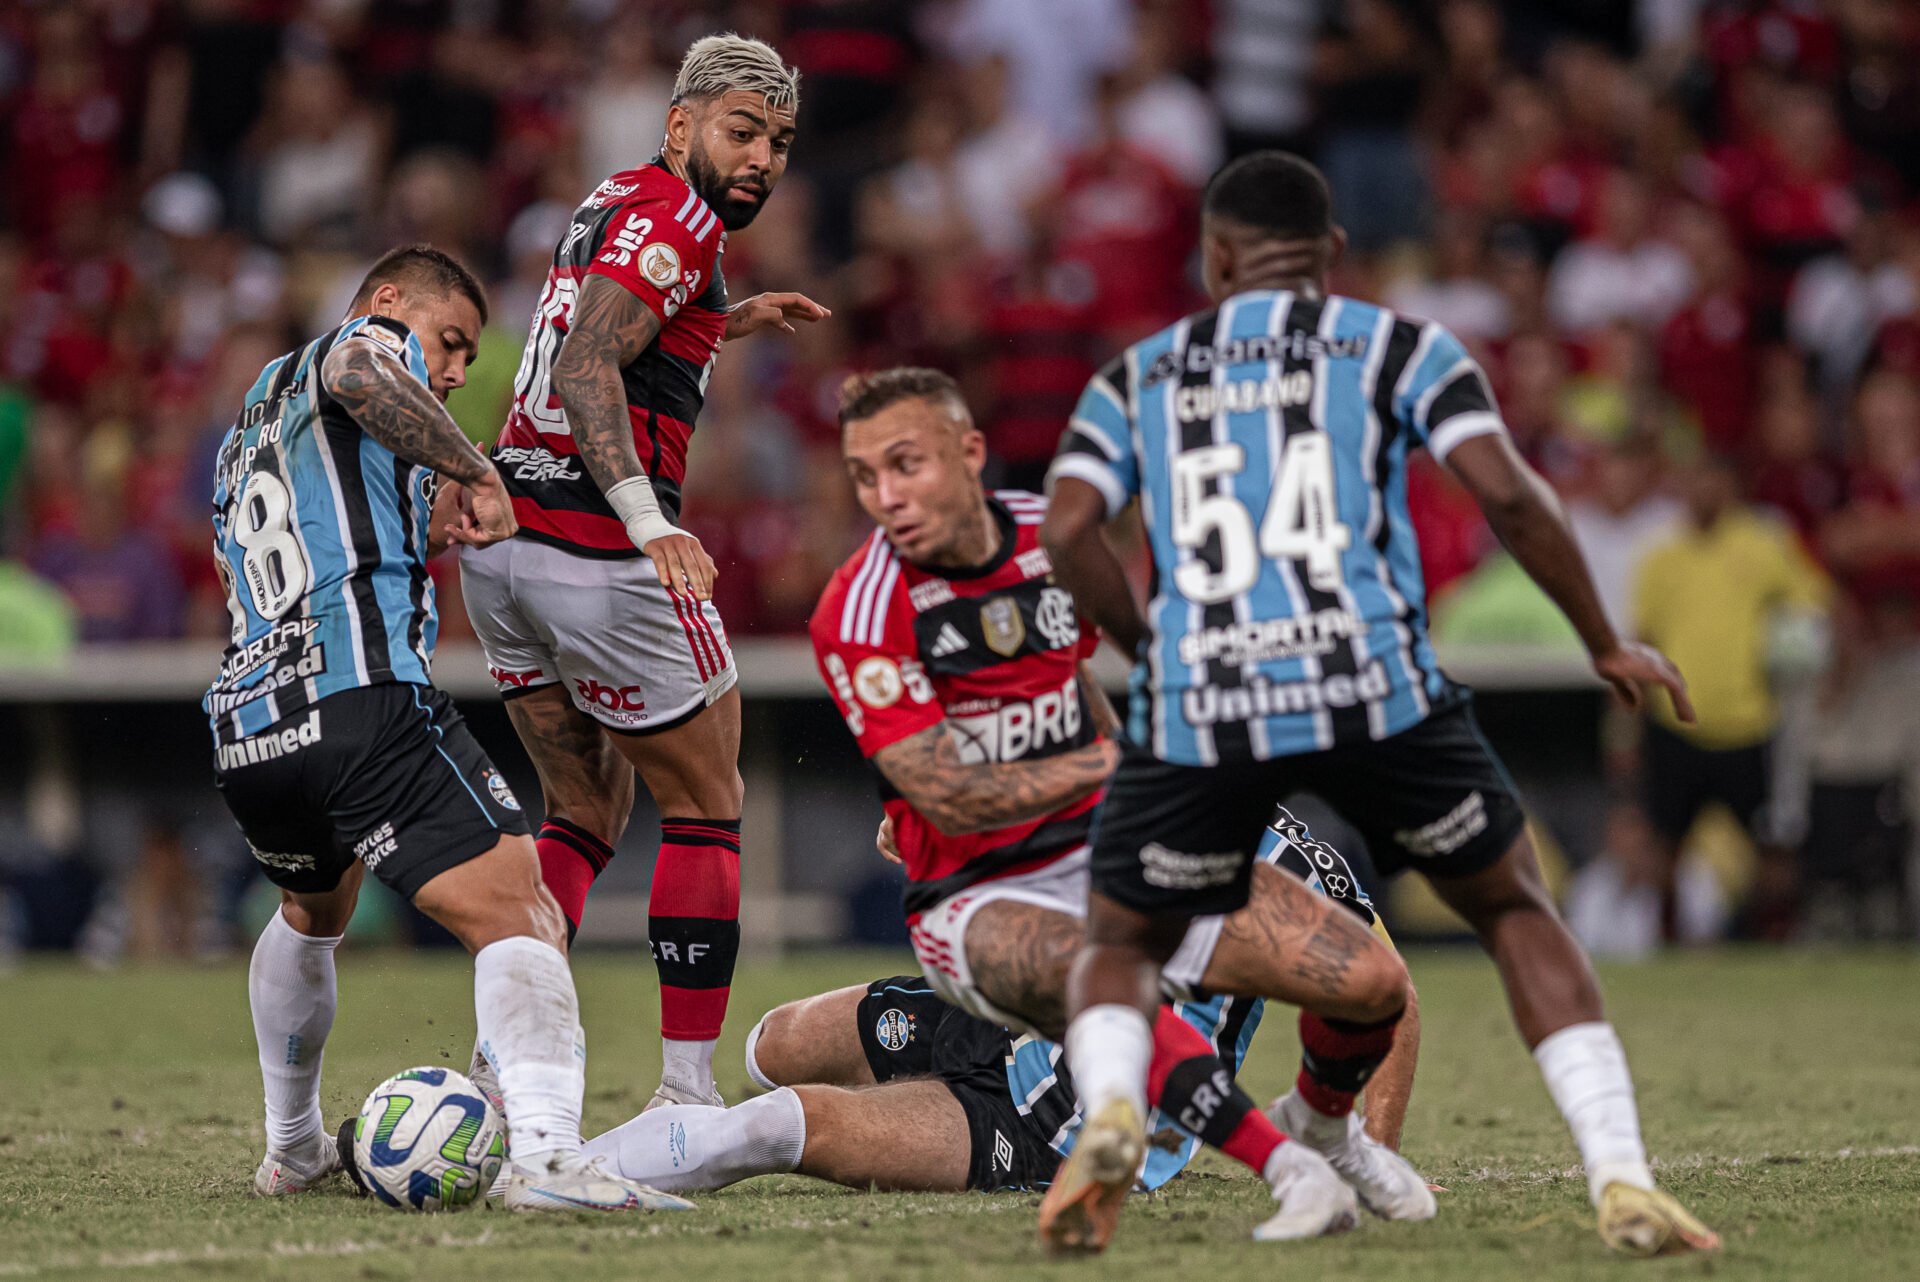 Corinthians conhece mando de campo da semifinal da Copa do Brasil